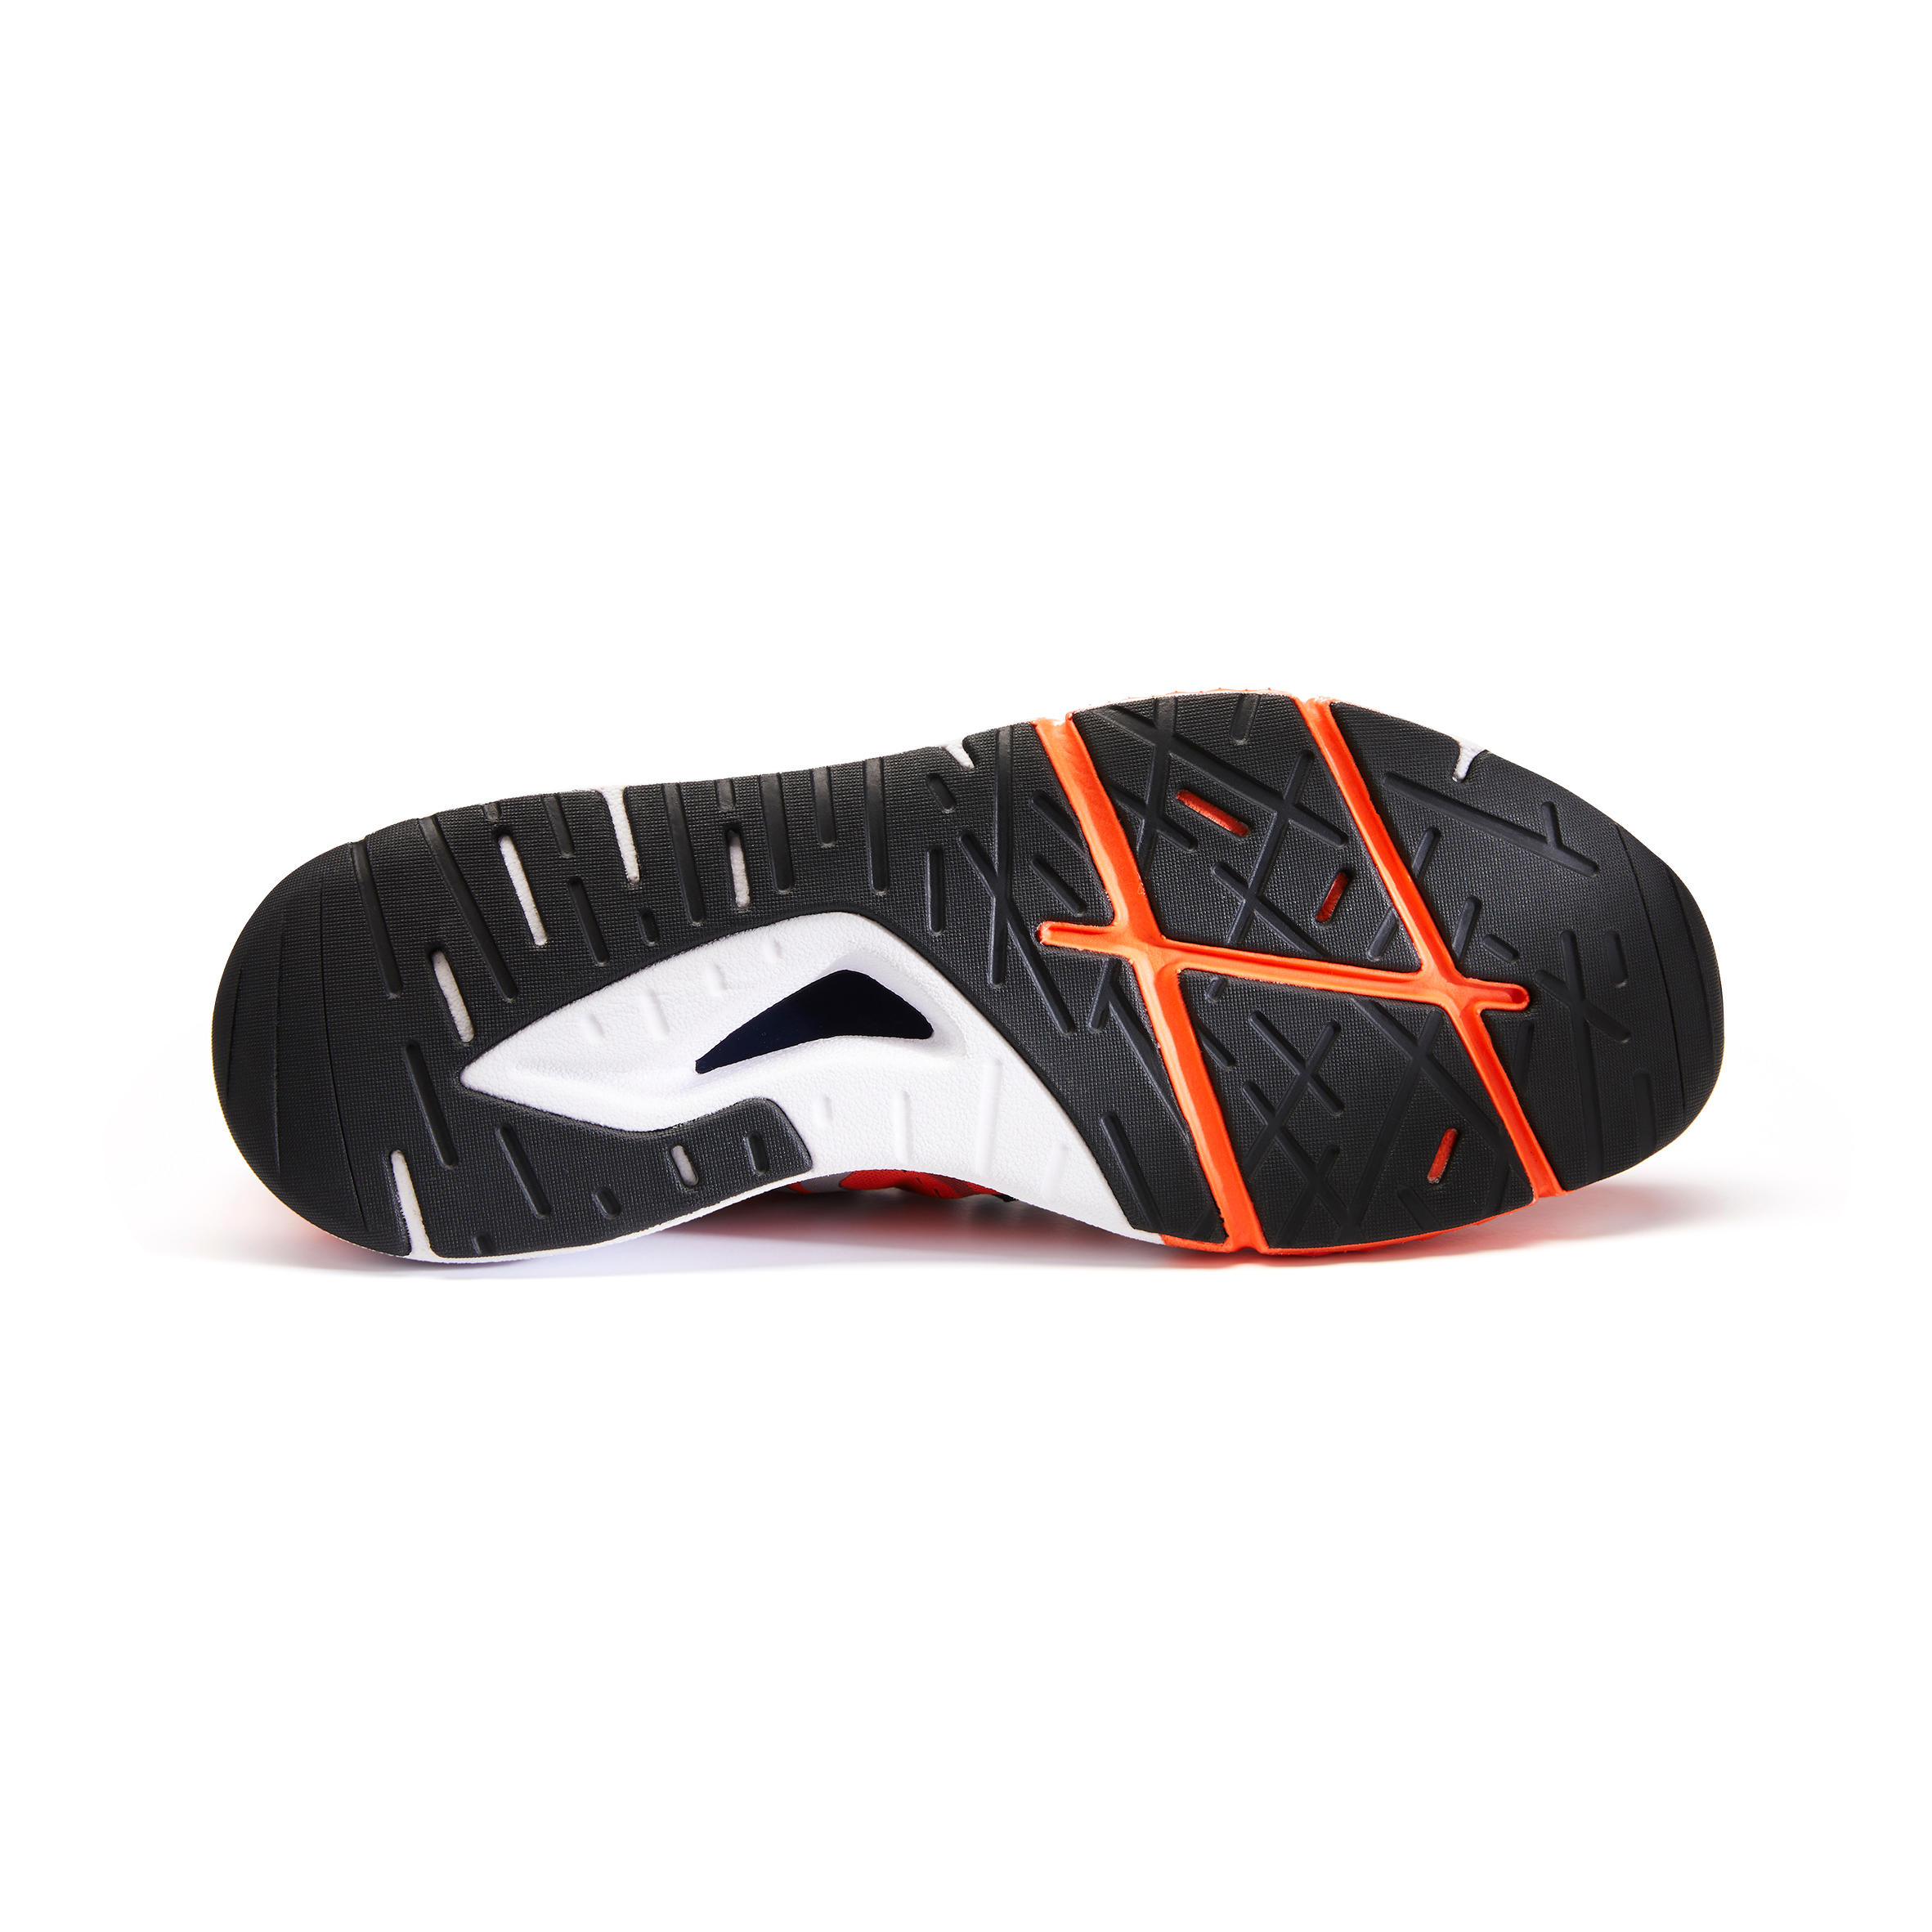 RW 900 Race fitness walking shoes - orange 6/12